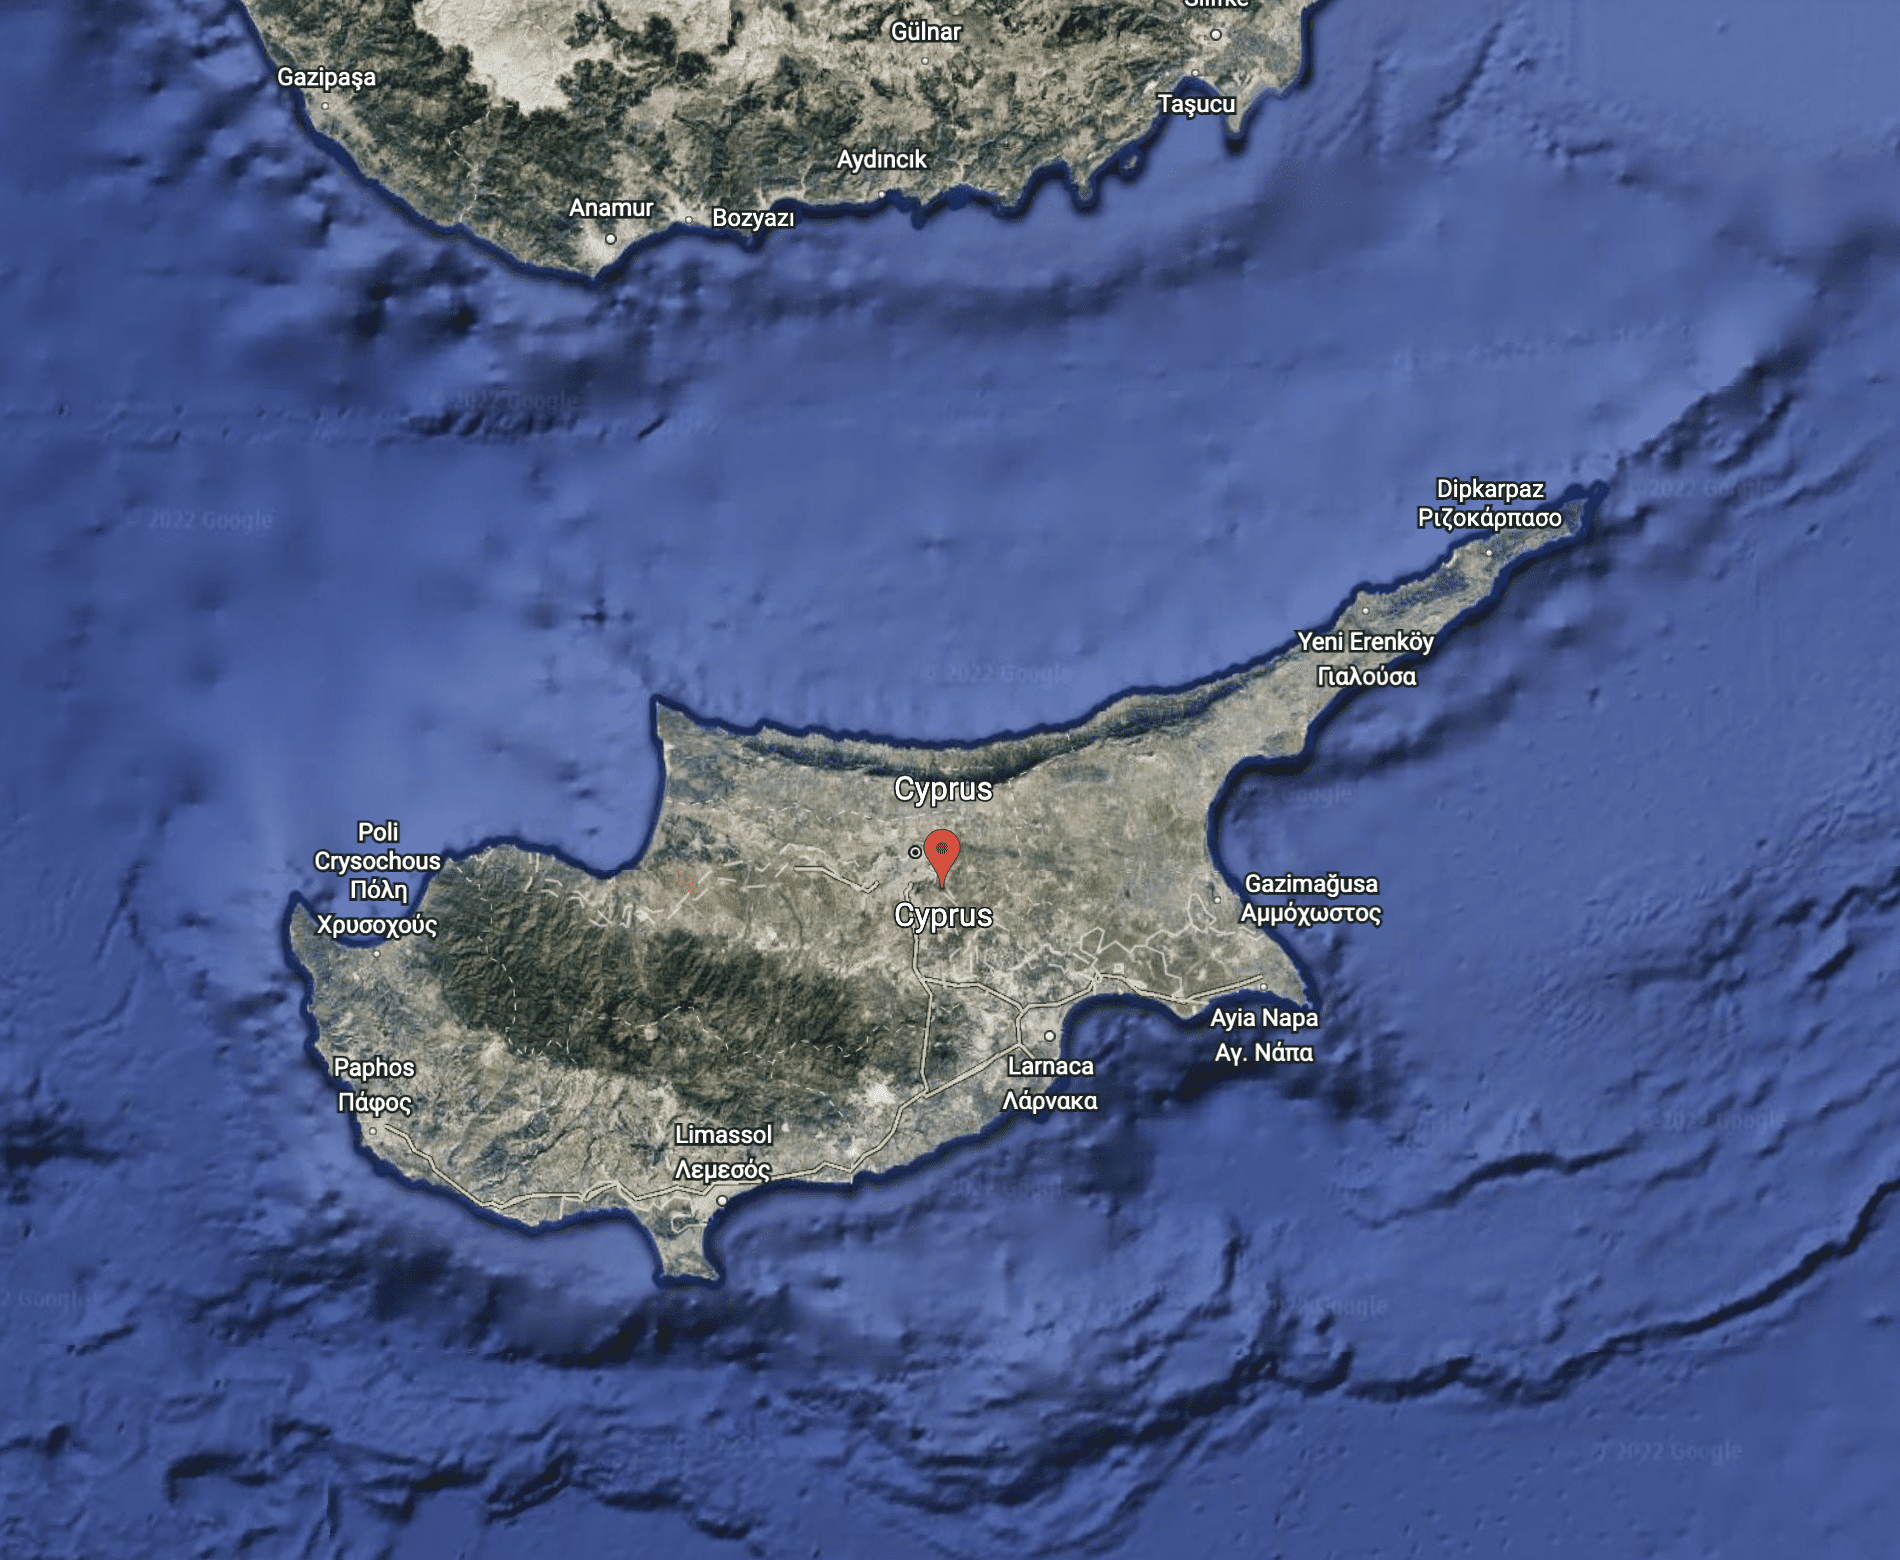 Google Earth Satellite Image of Cyprus